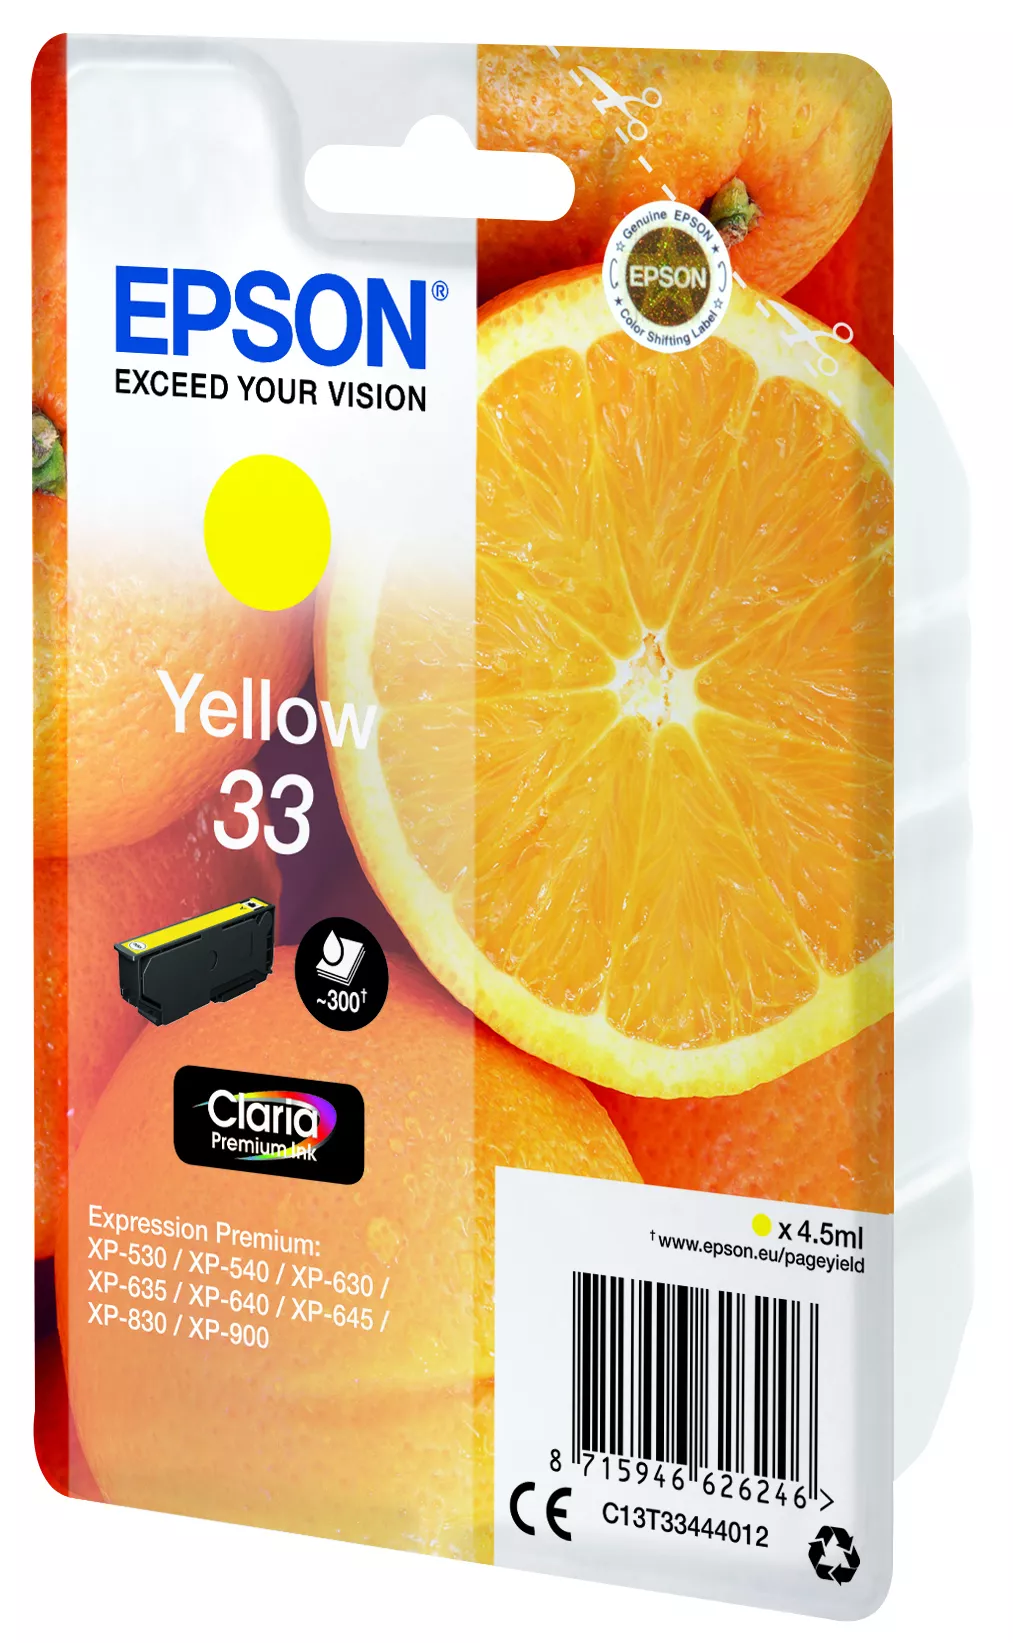 Vente EPSON Cartouche Oranges Encre Claria Premium Jaune Epson au meilleur prix - visuel 4